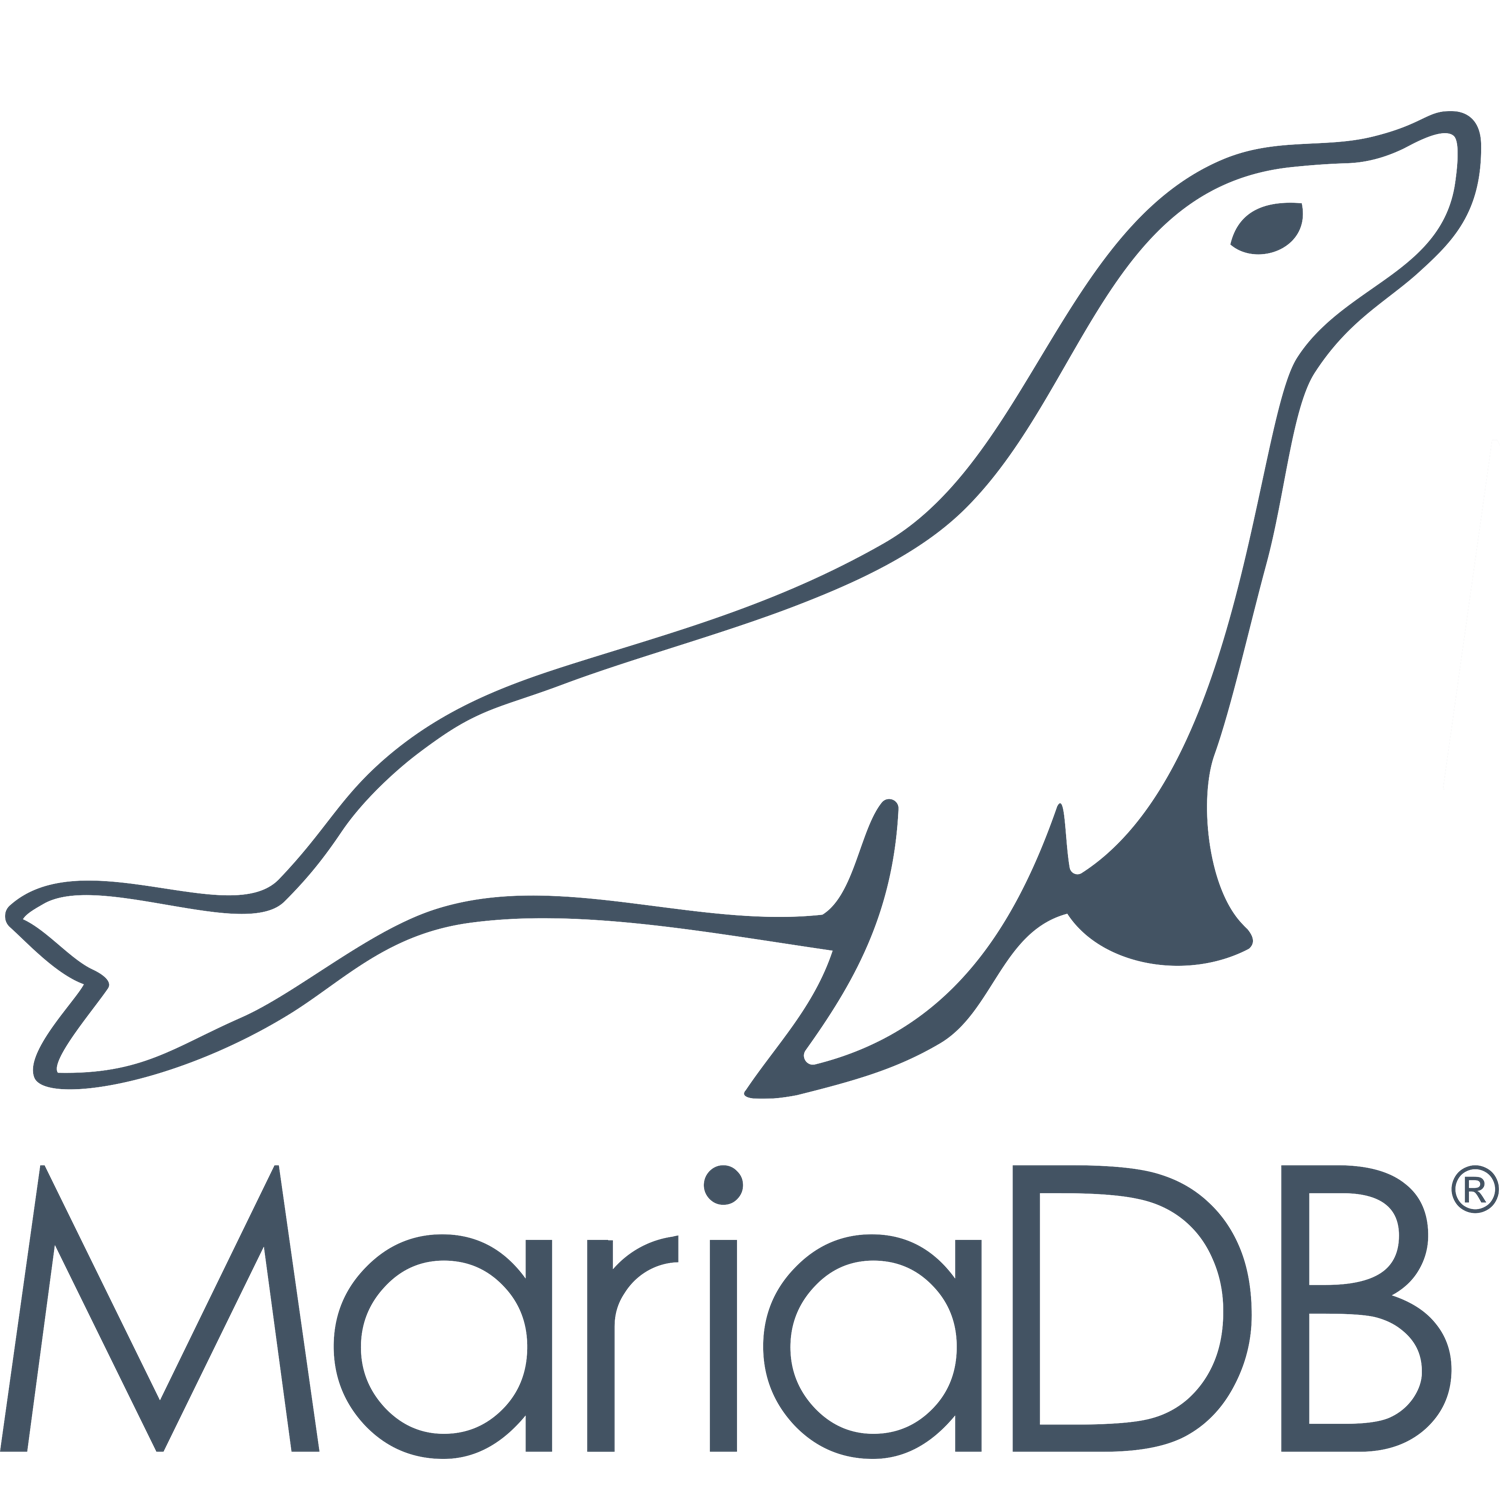 Mariadb что это. MARIADB. СУБД MARIADB. MARIADB logo. MYSQL MARIADB.